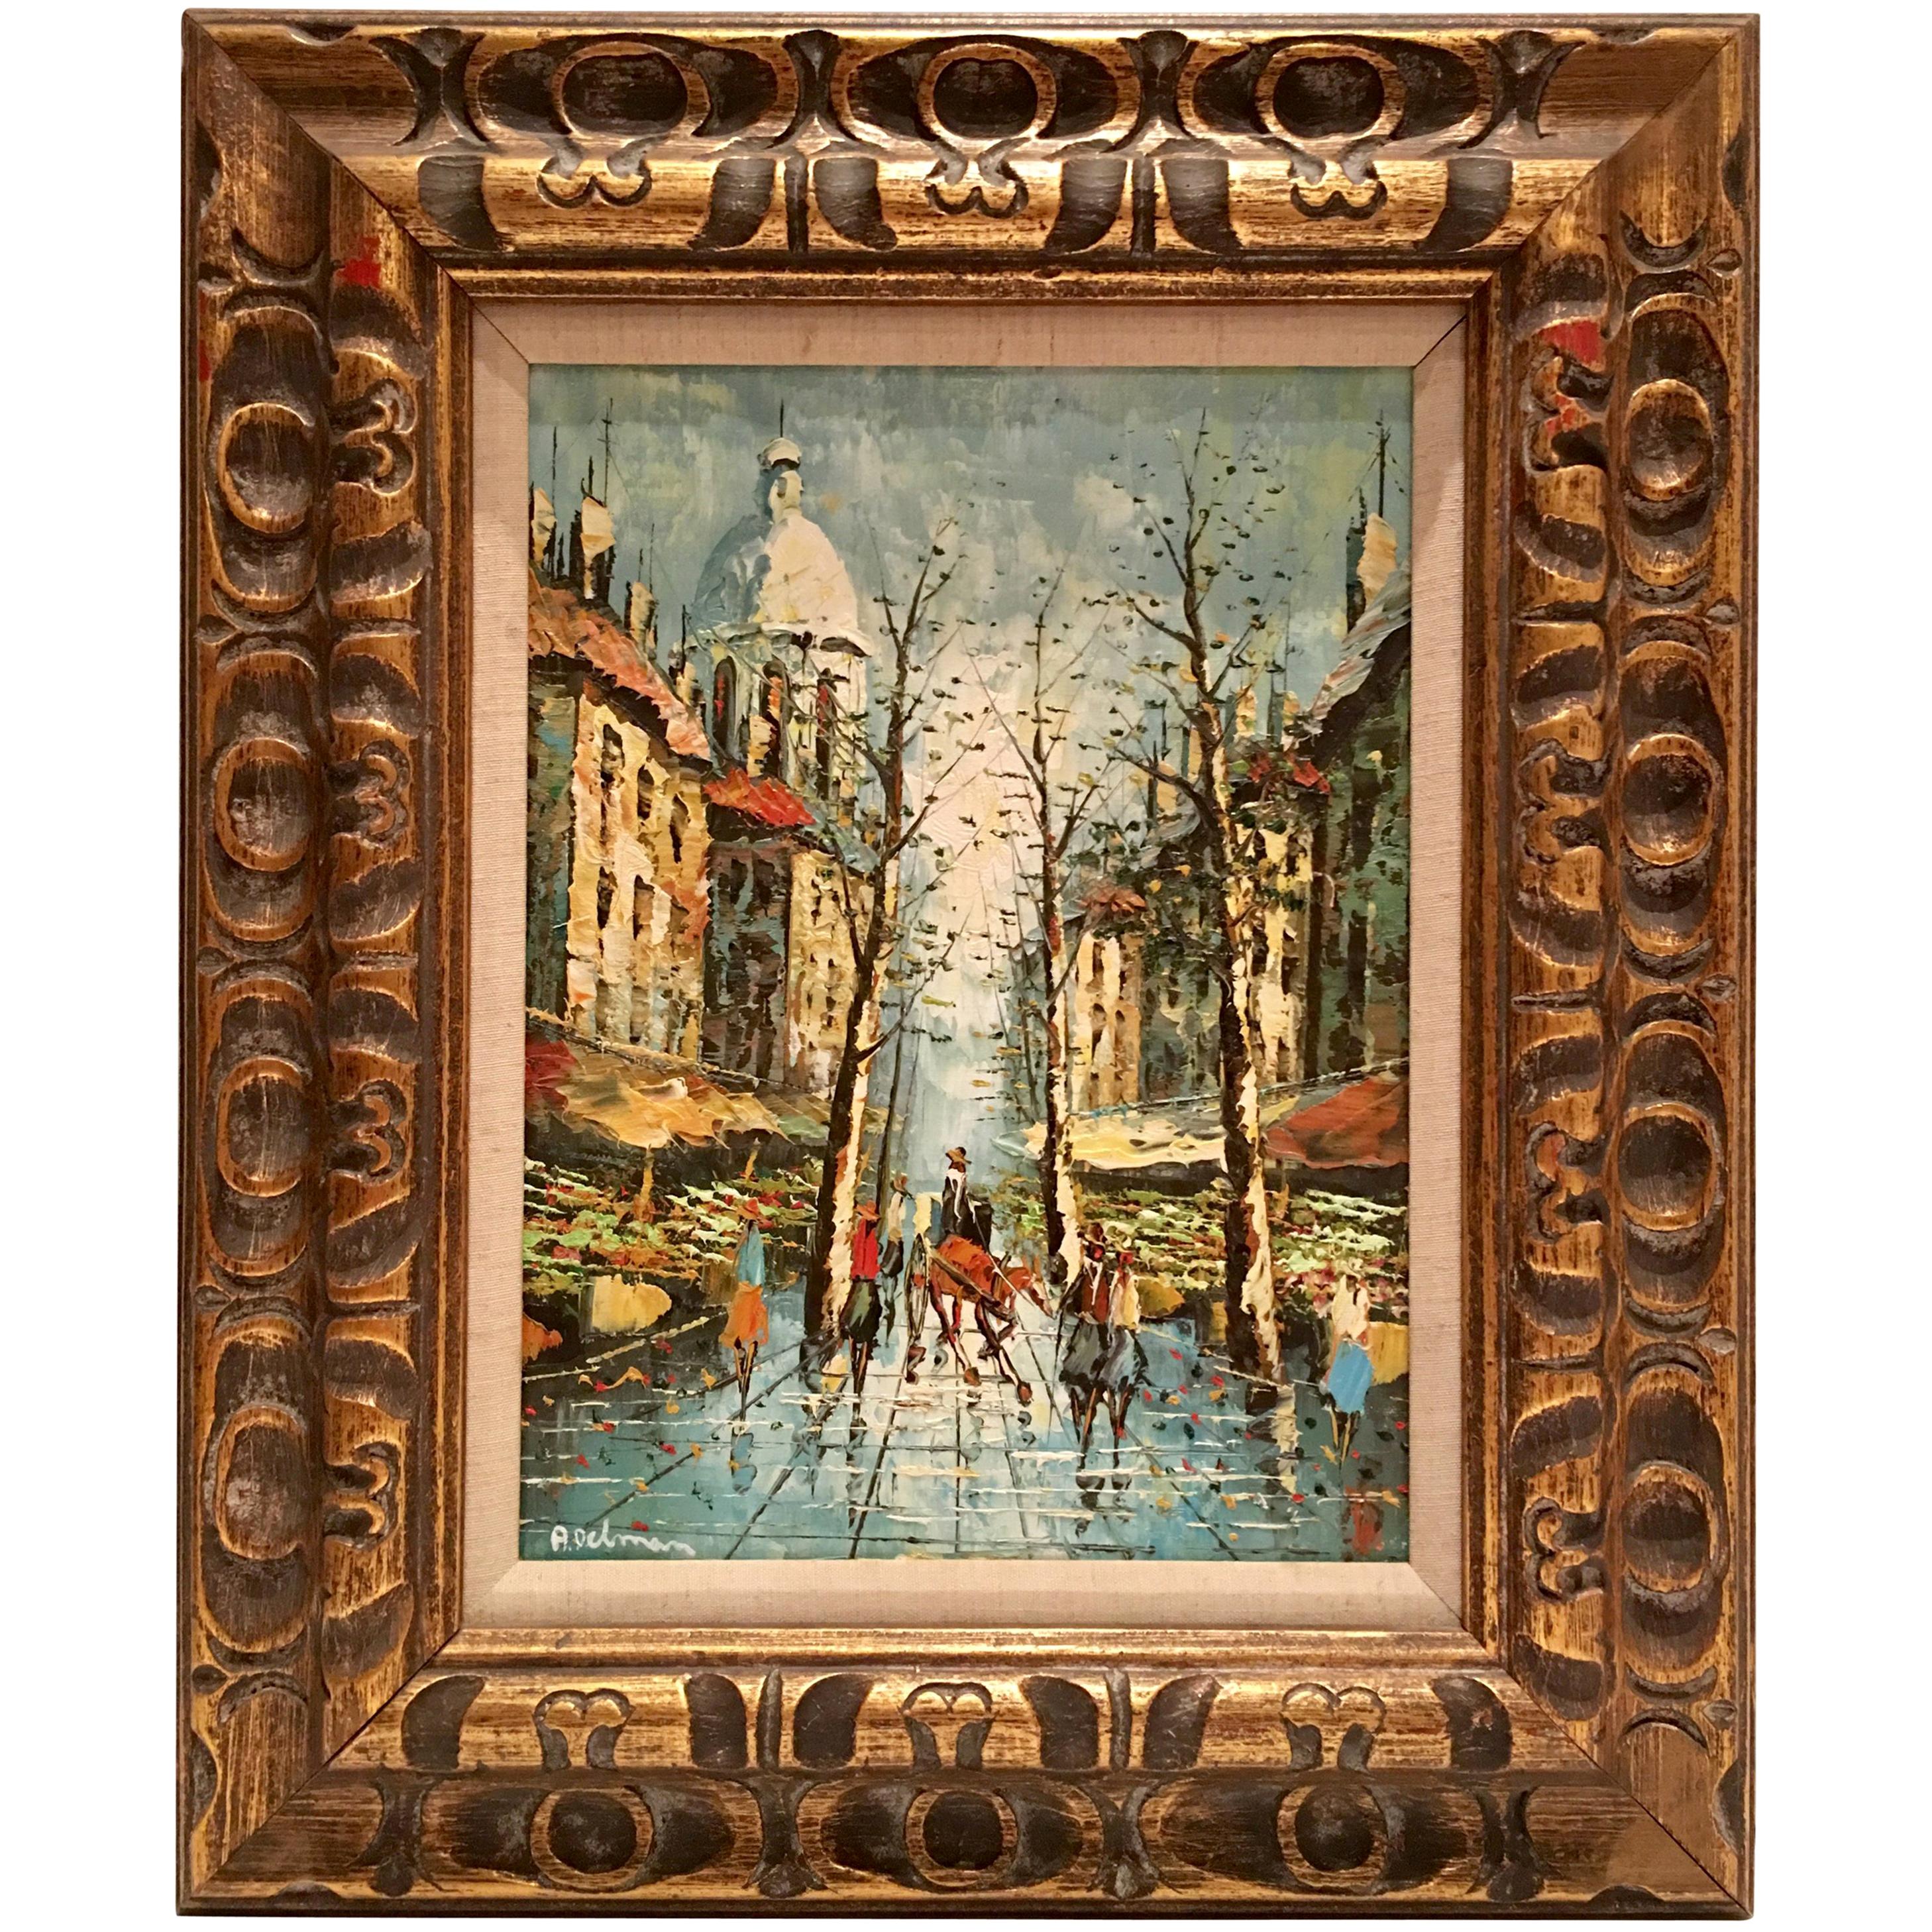 Midcentury Original Oil on Canvas Painting "Paris Market" by A. Delman